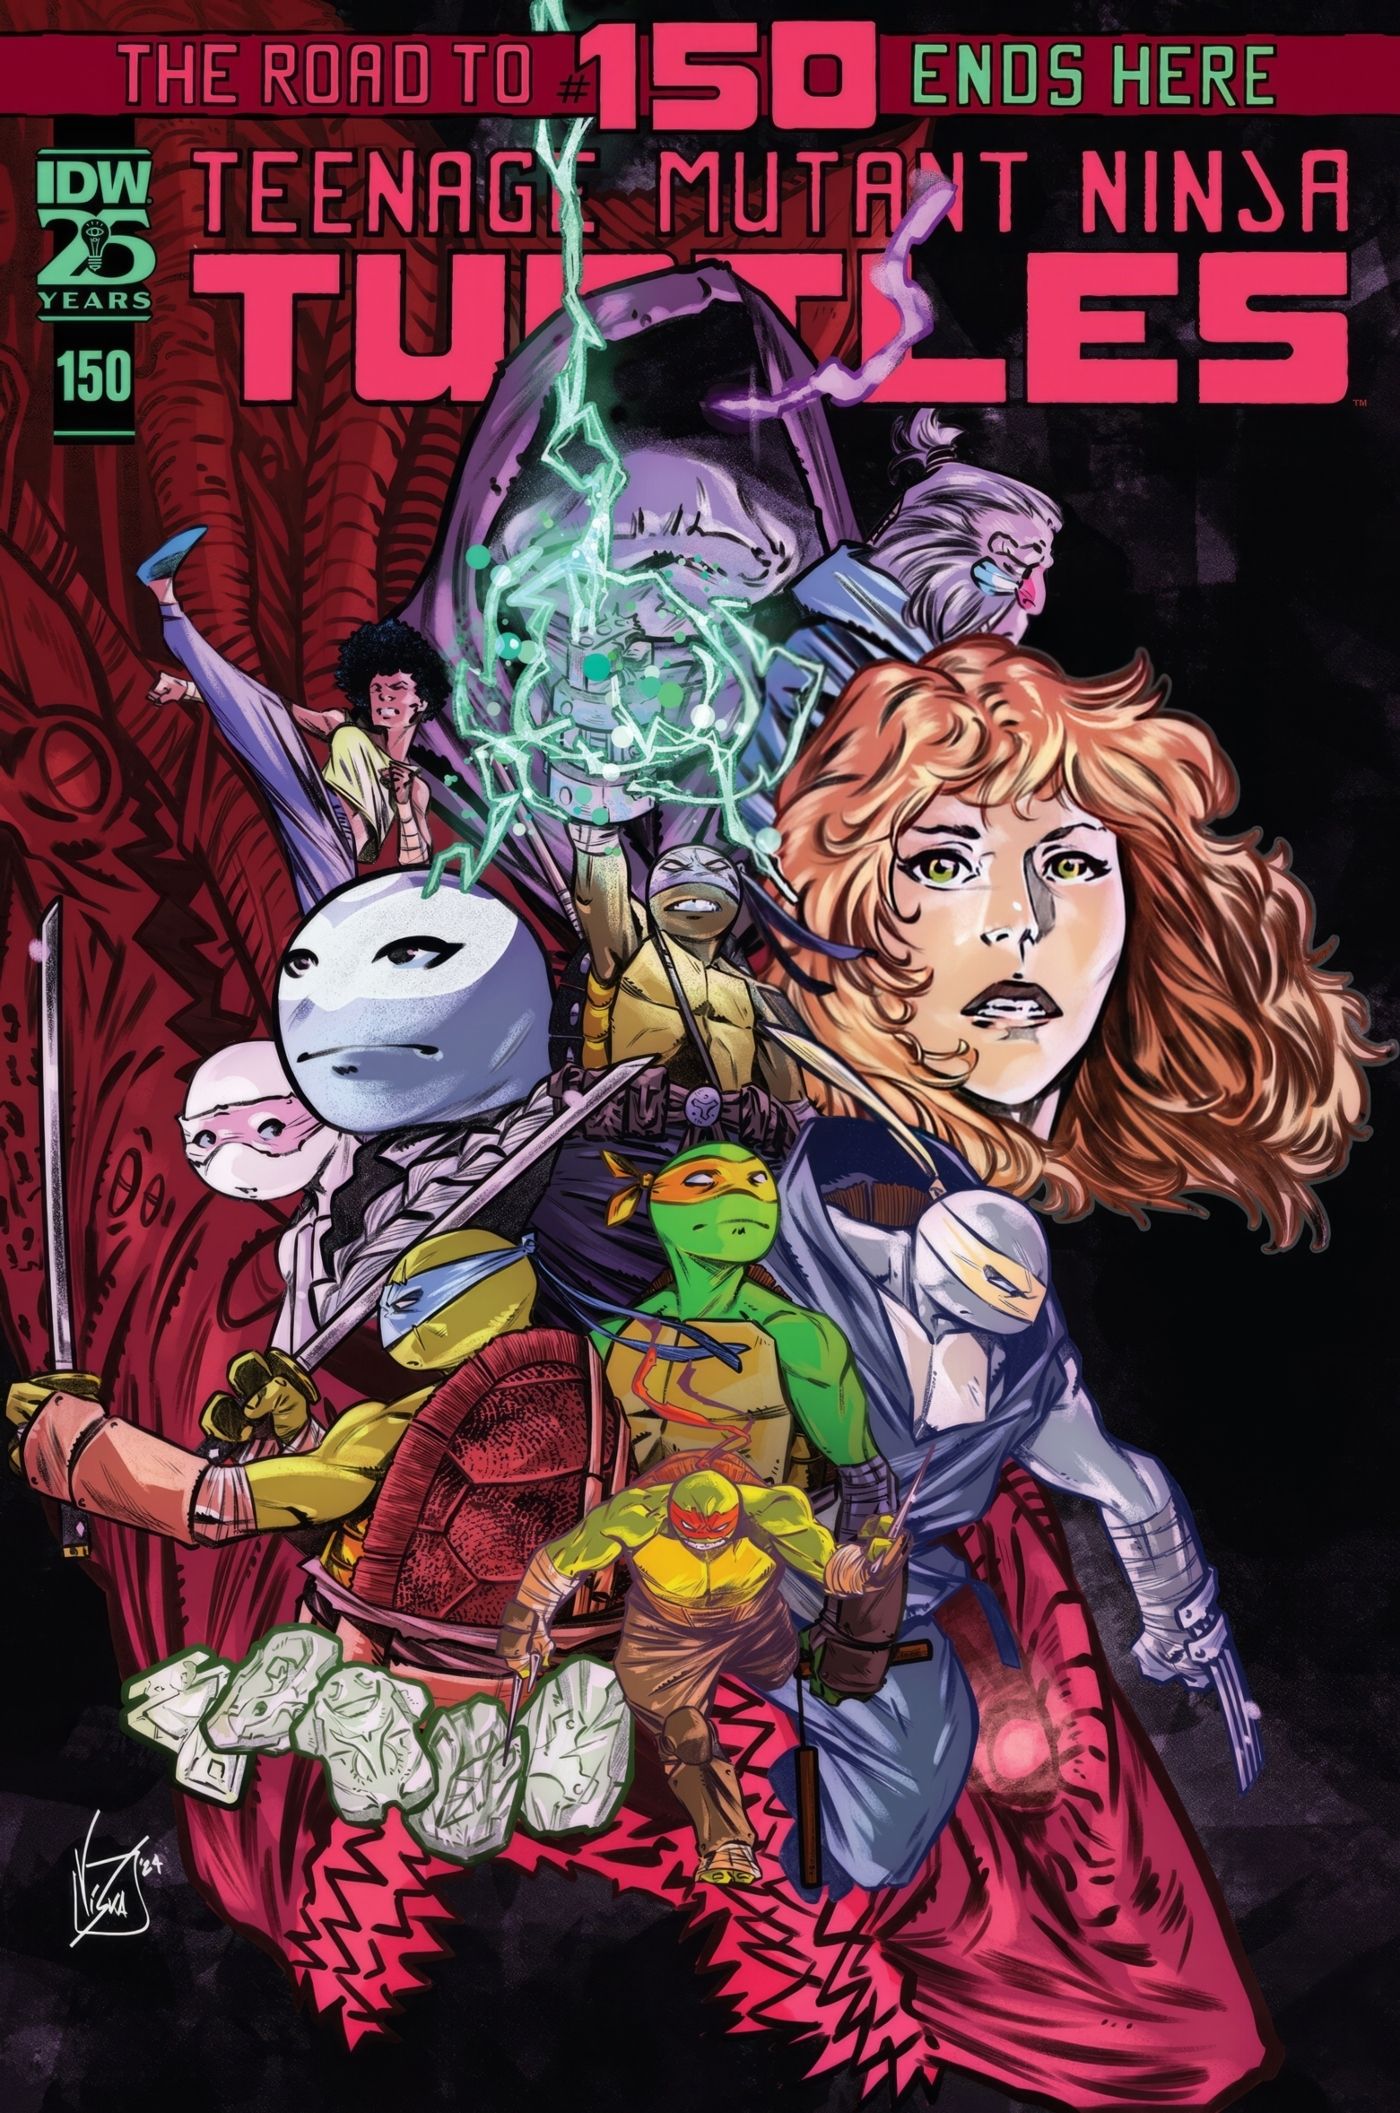 Arte da capa do Teenage Mutant Ninja Turtles # 150 apresentando todos os heróis das tartarugas.